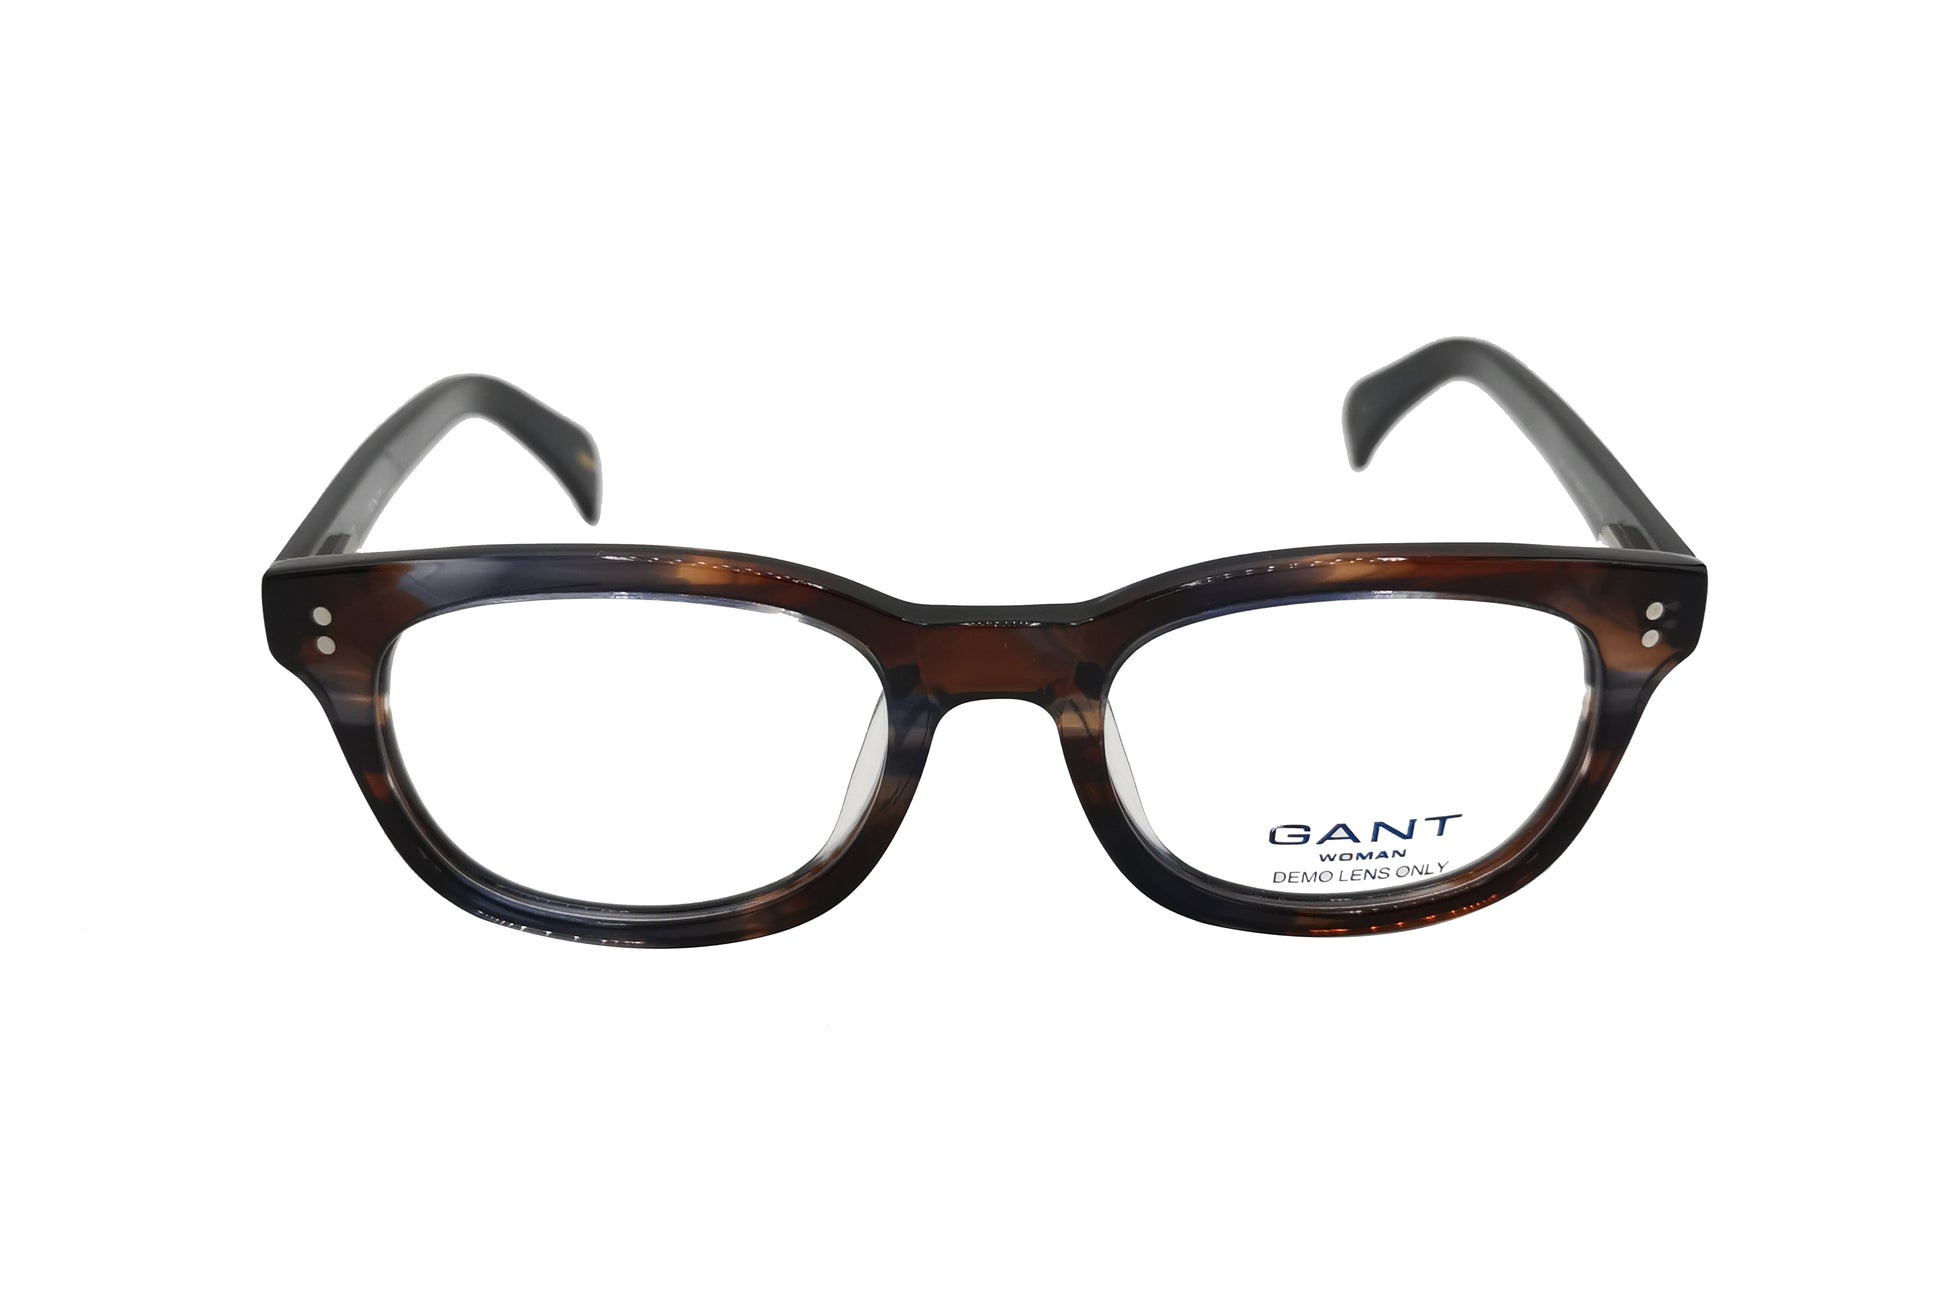 NS Luxury - Juvet - Tortoise - Eyeglasses